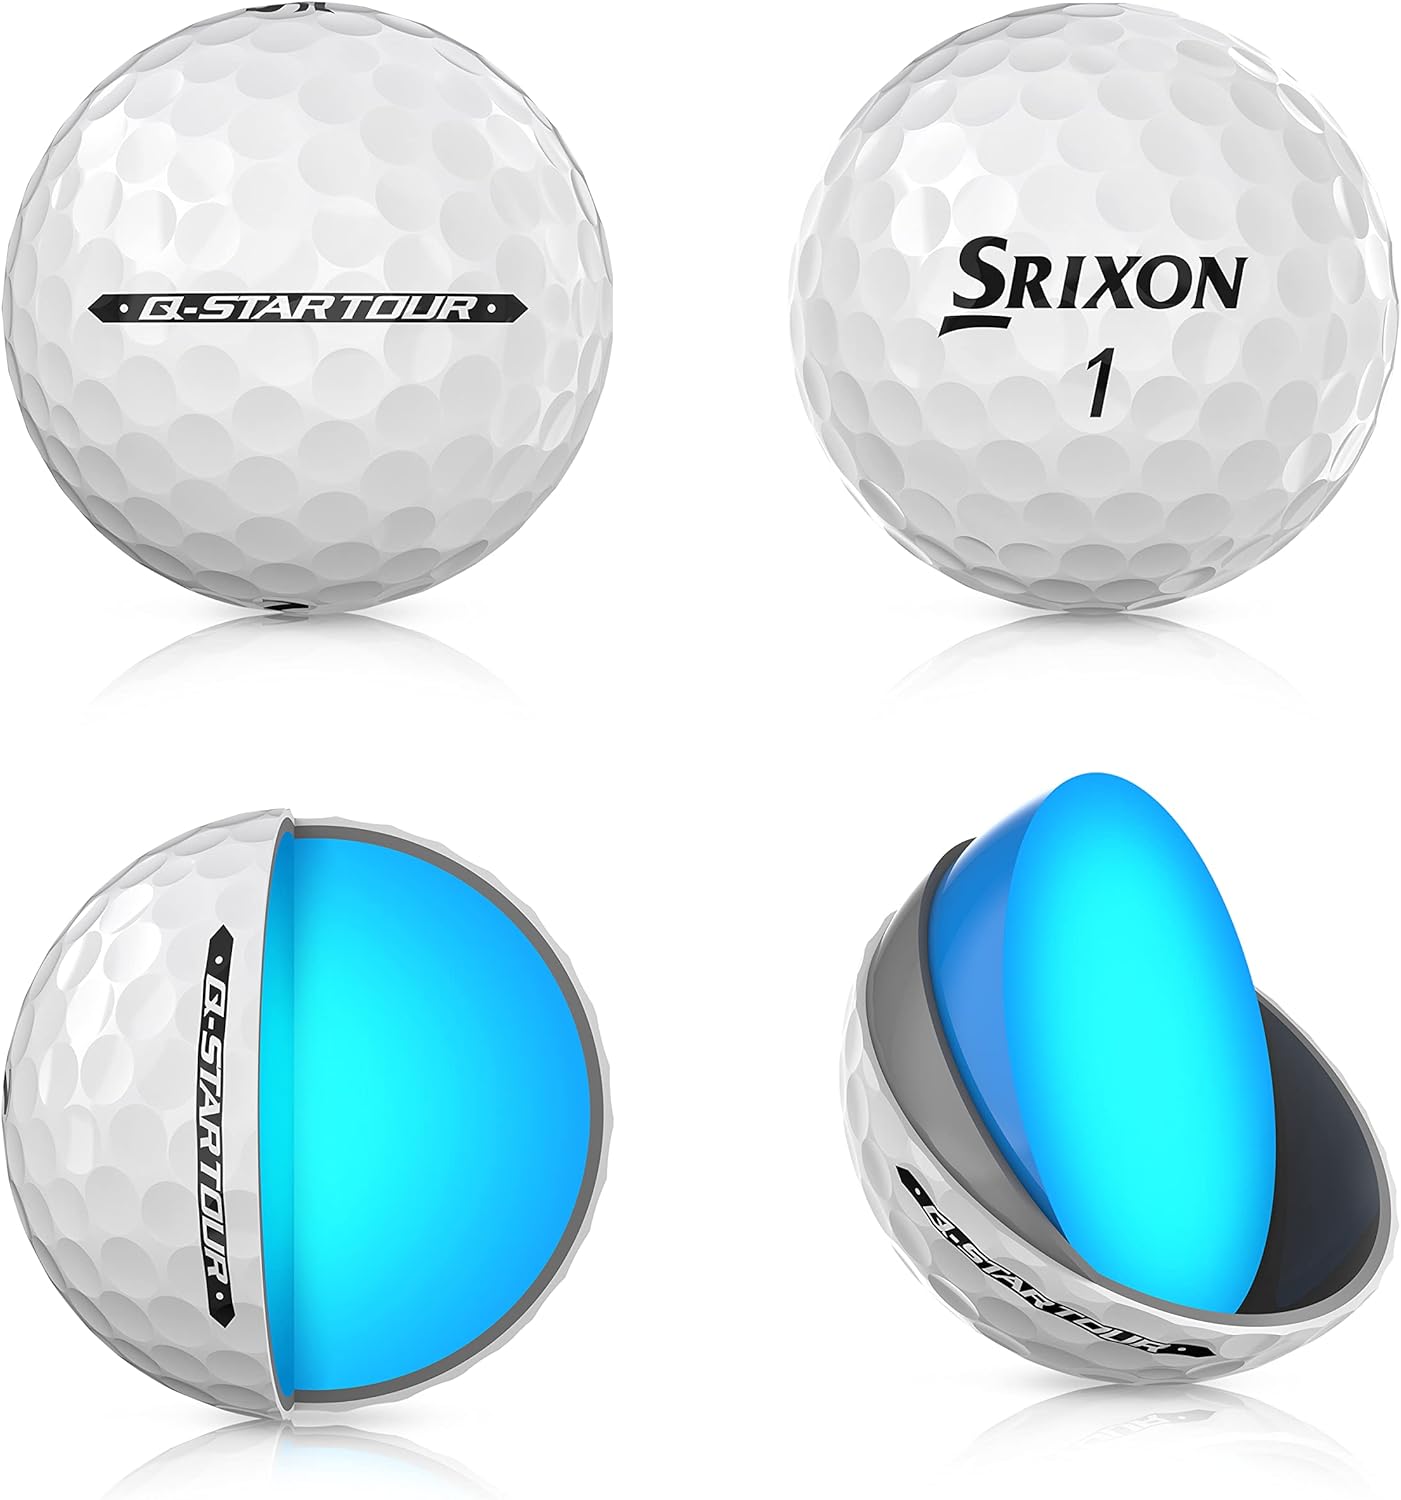 Srixon Q Star Tour Golf Ball Review